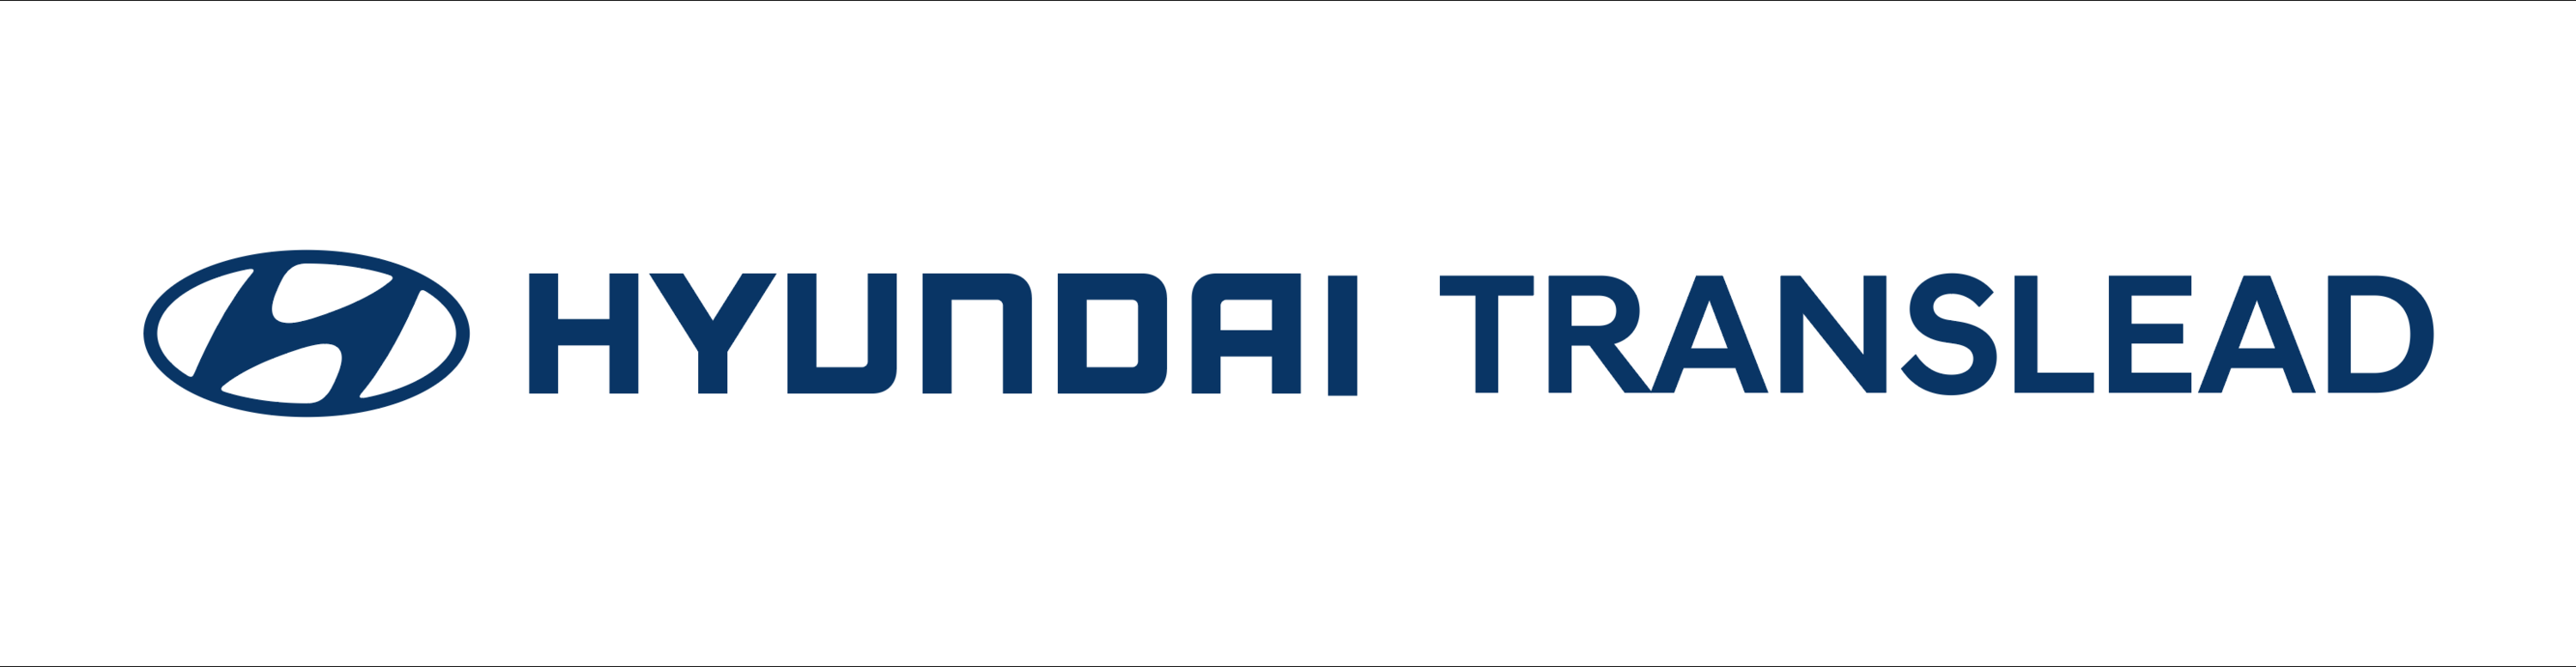 Fleet Equipment Hyundai Translead Trailers